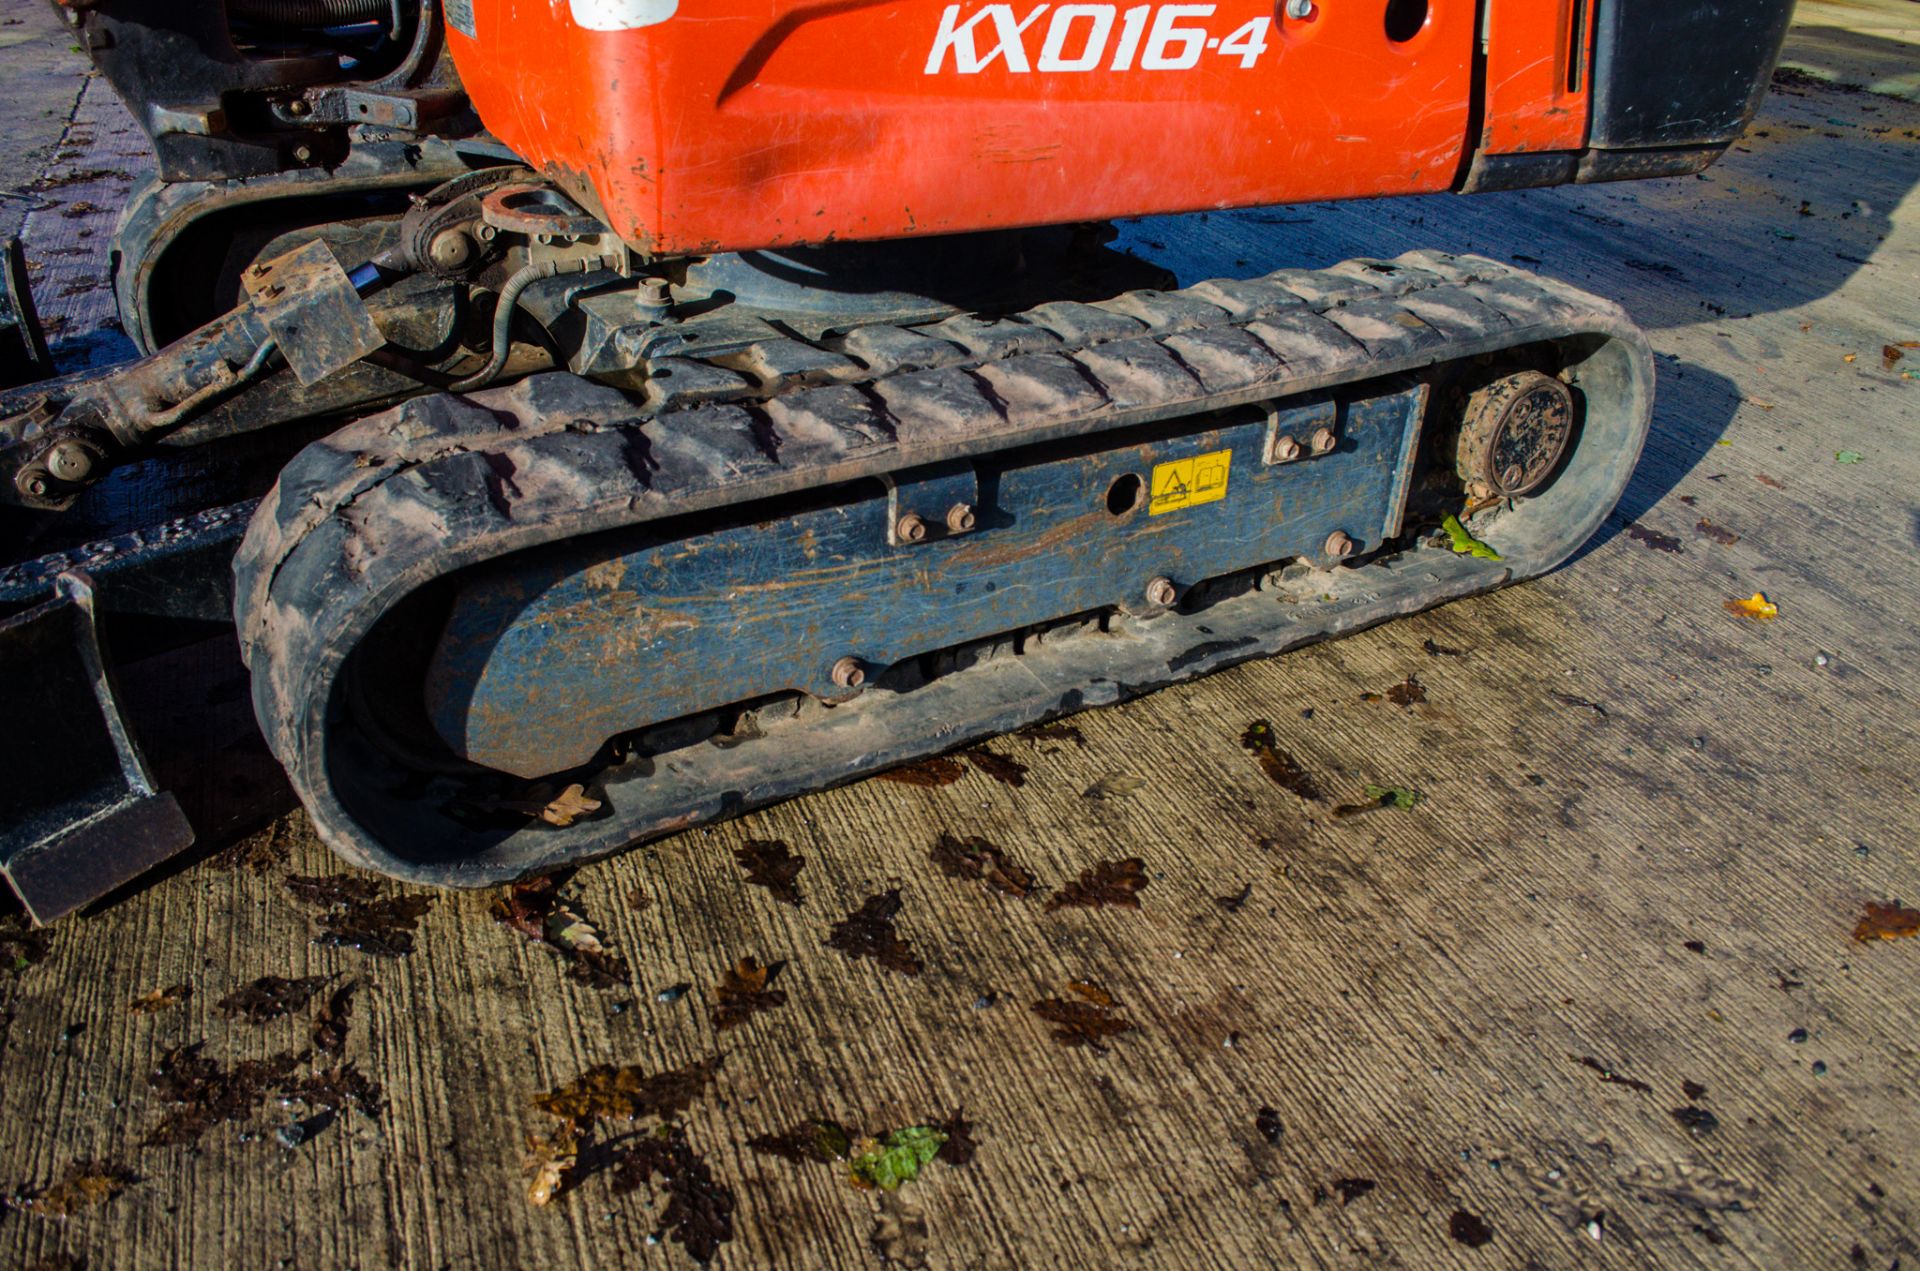 Kubota KX016-4 1.6 tonne rubber tracked mini excavator Year: 2014 S/N: 58179 Recorded Hours: 1812 - Image 14 of 19